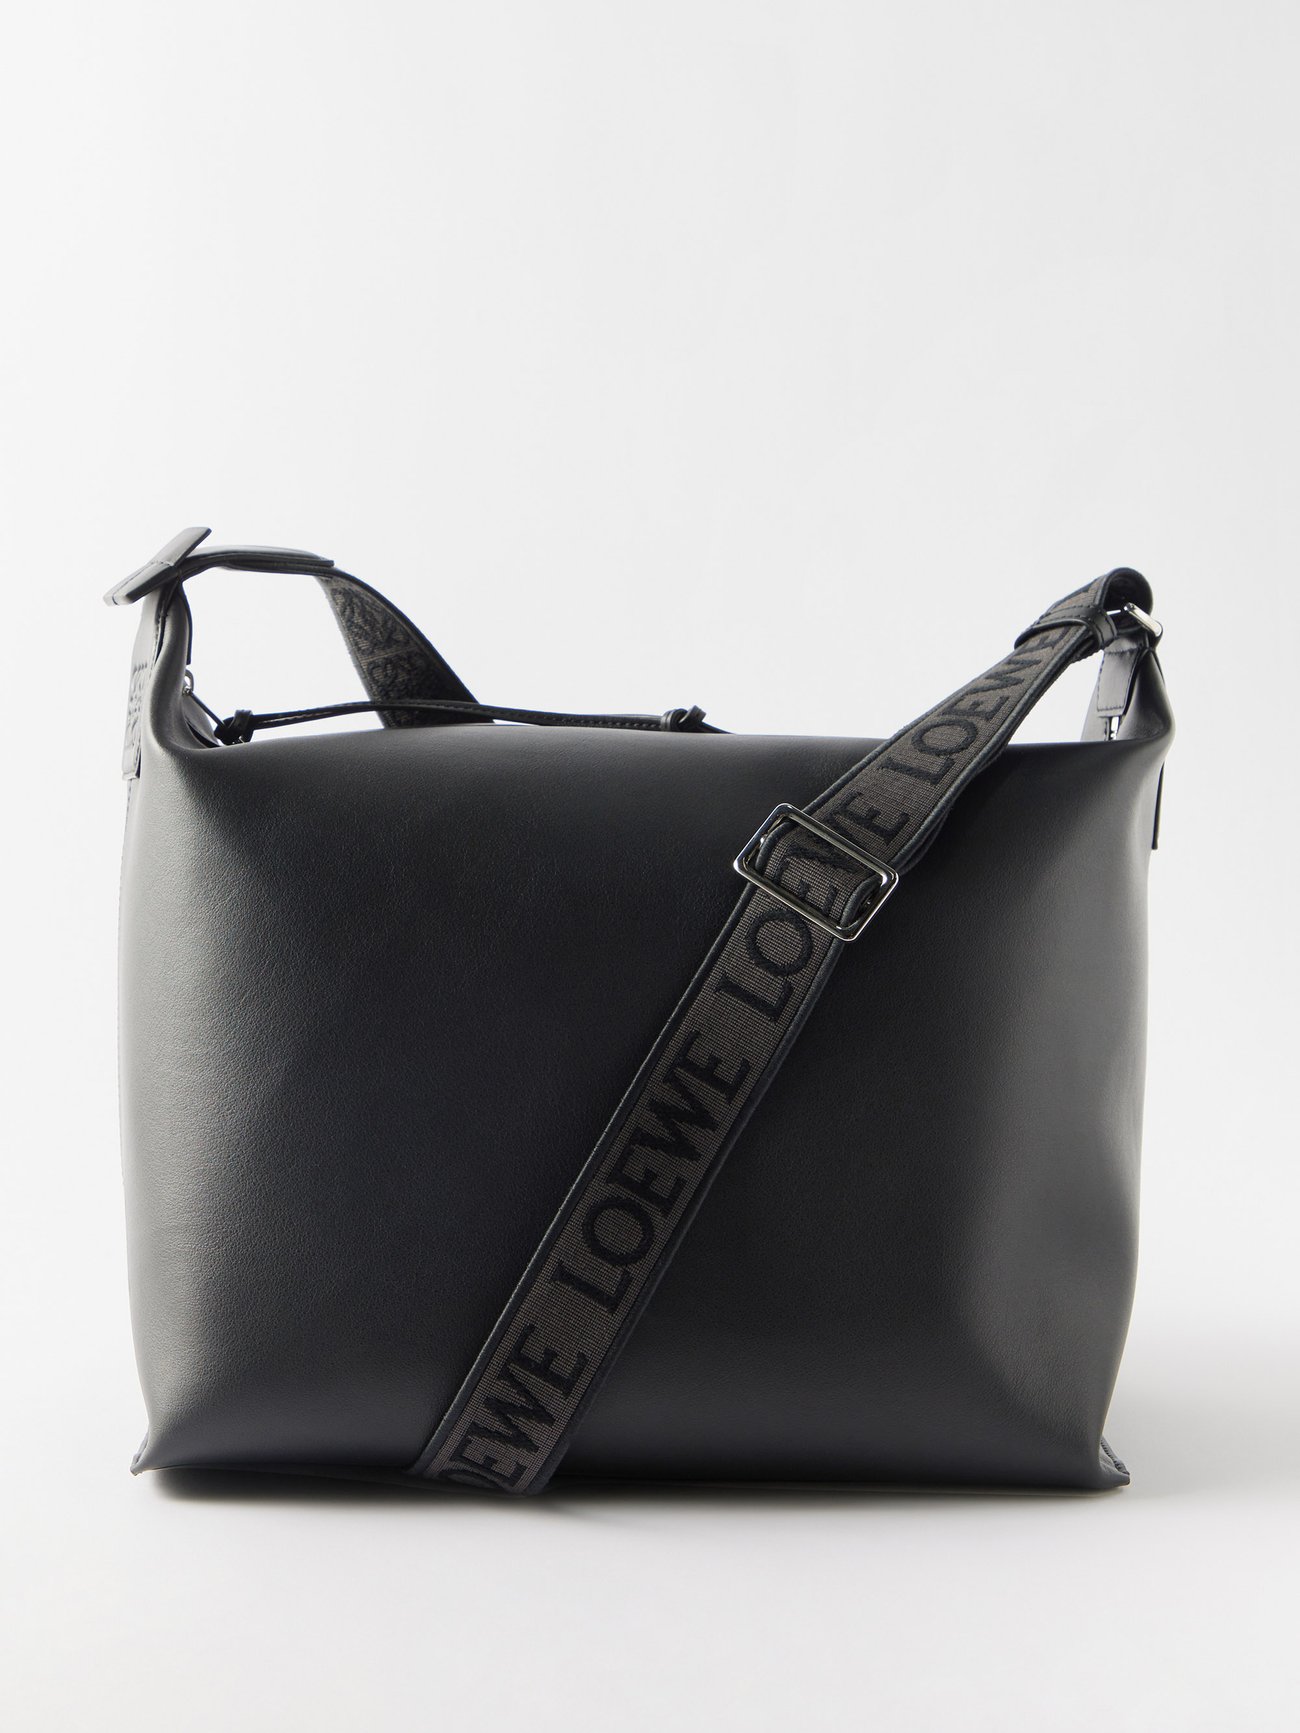 Loewe Cubi Small Leather Crossbody Bag in Black for Men